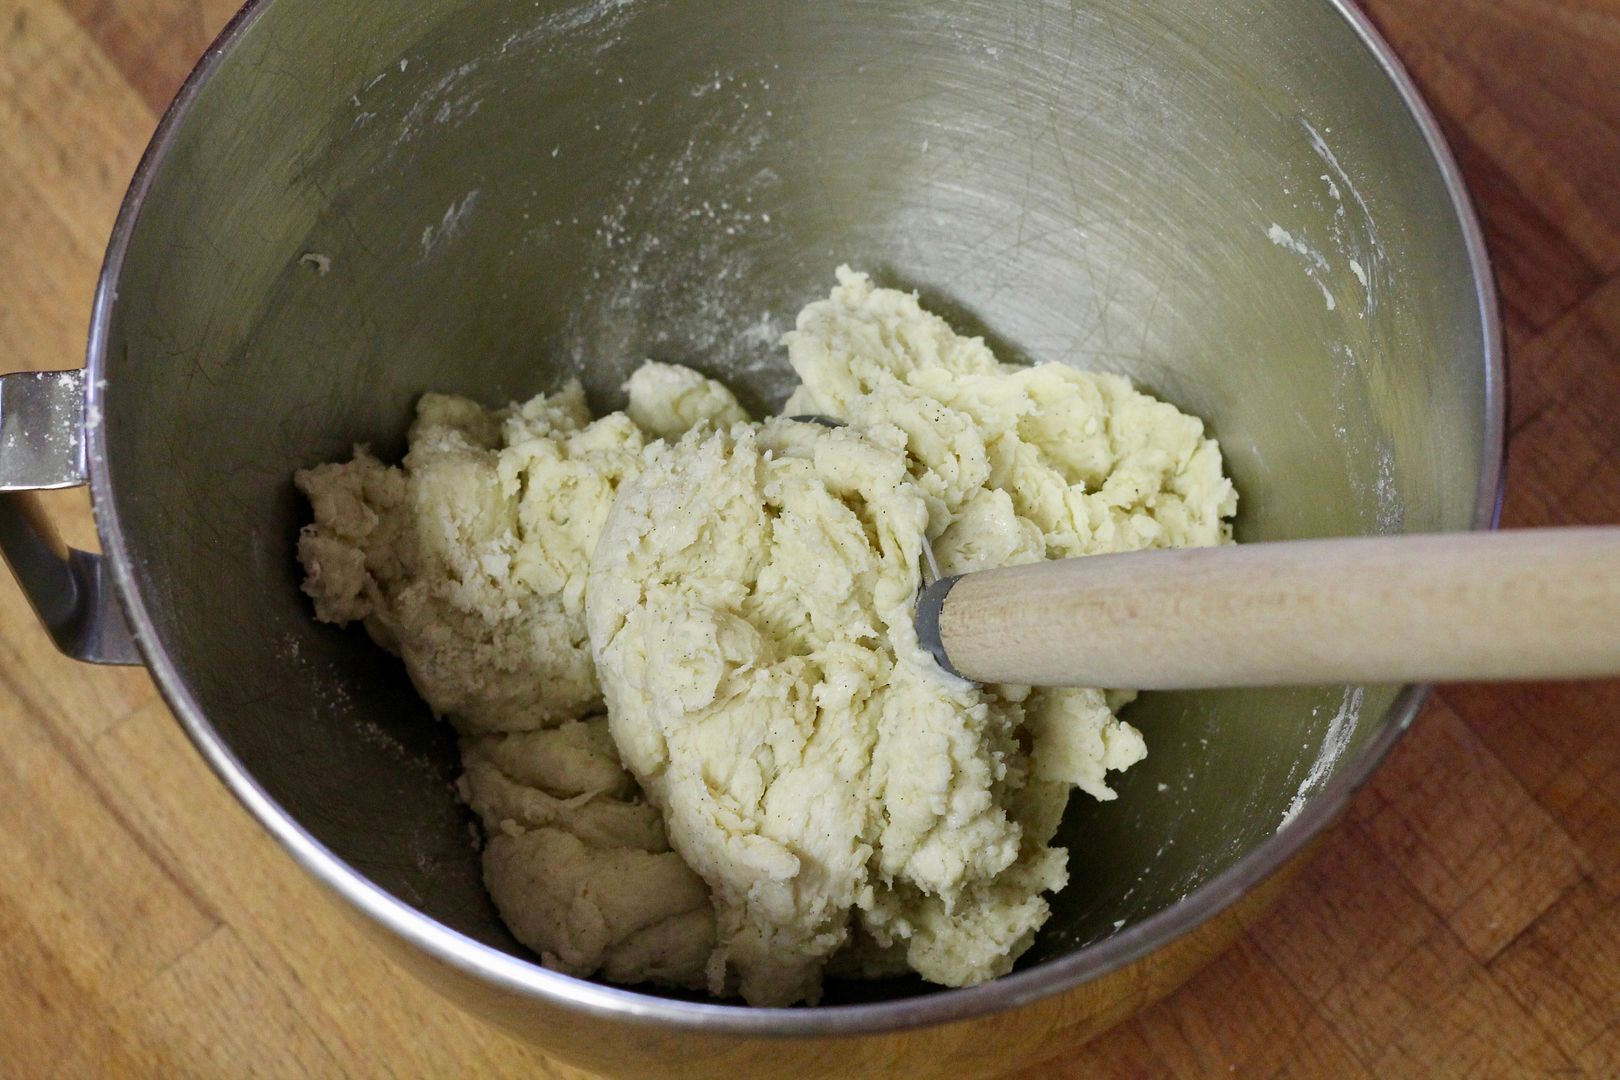 ragged dough